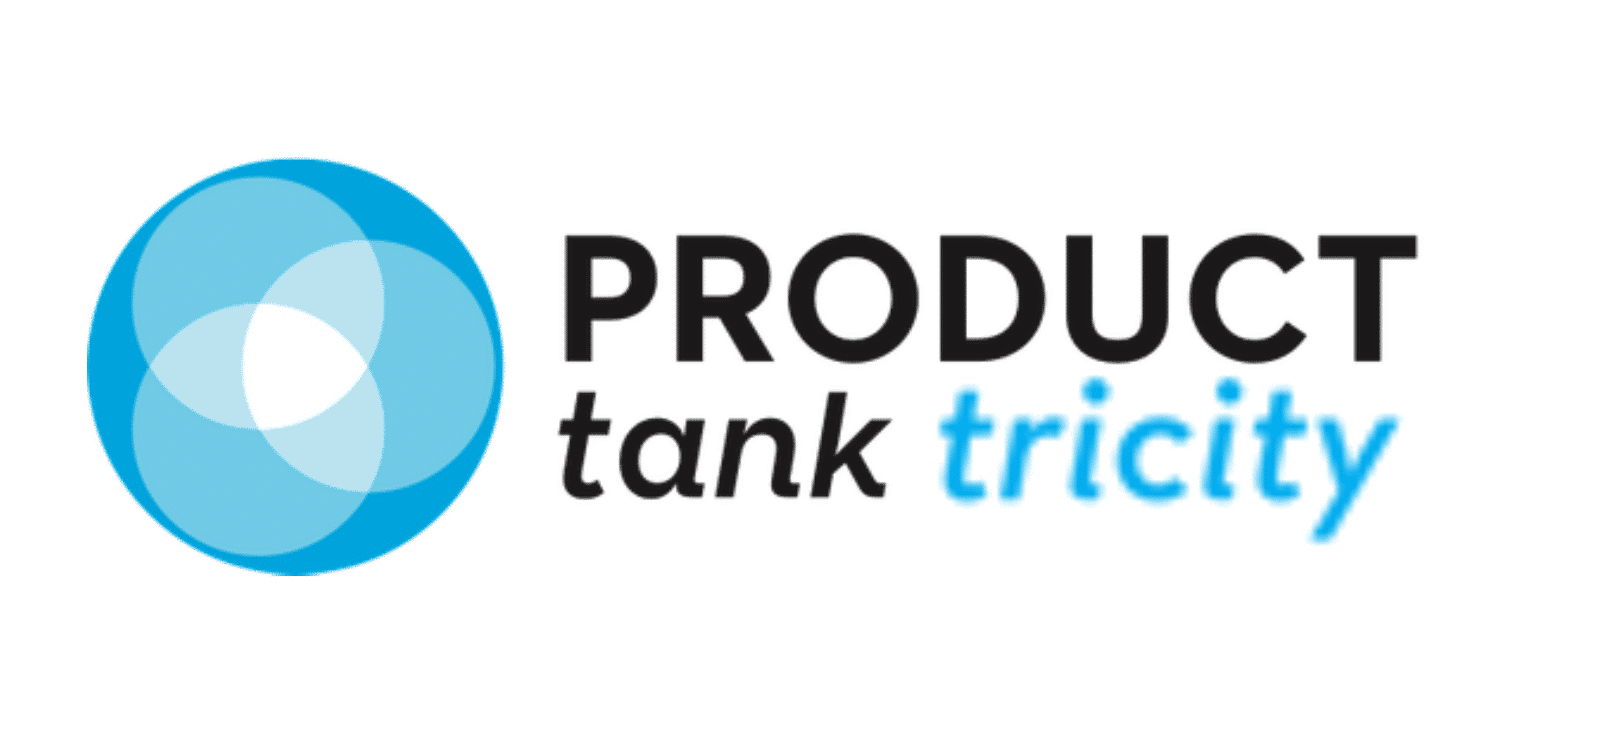 ProductTank Tricity logo